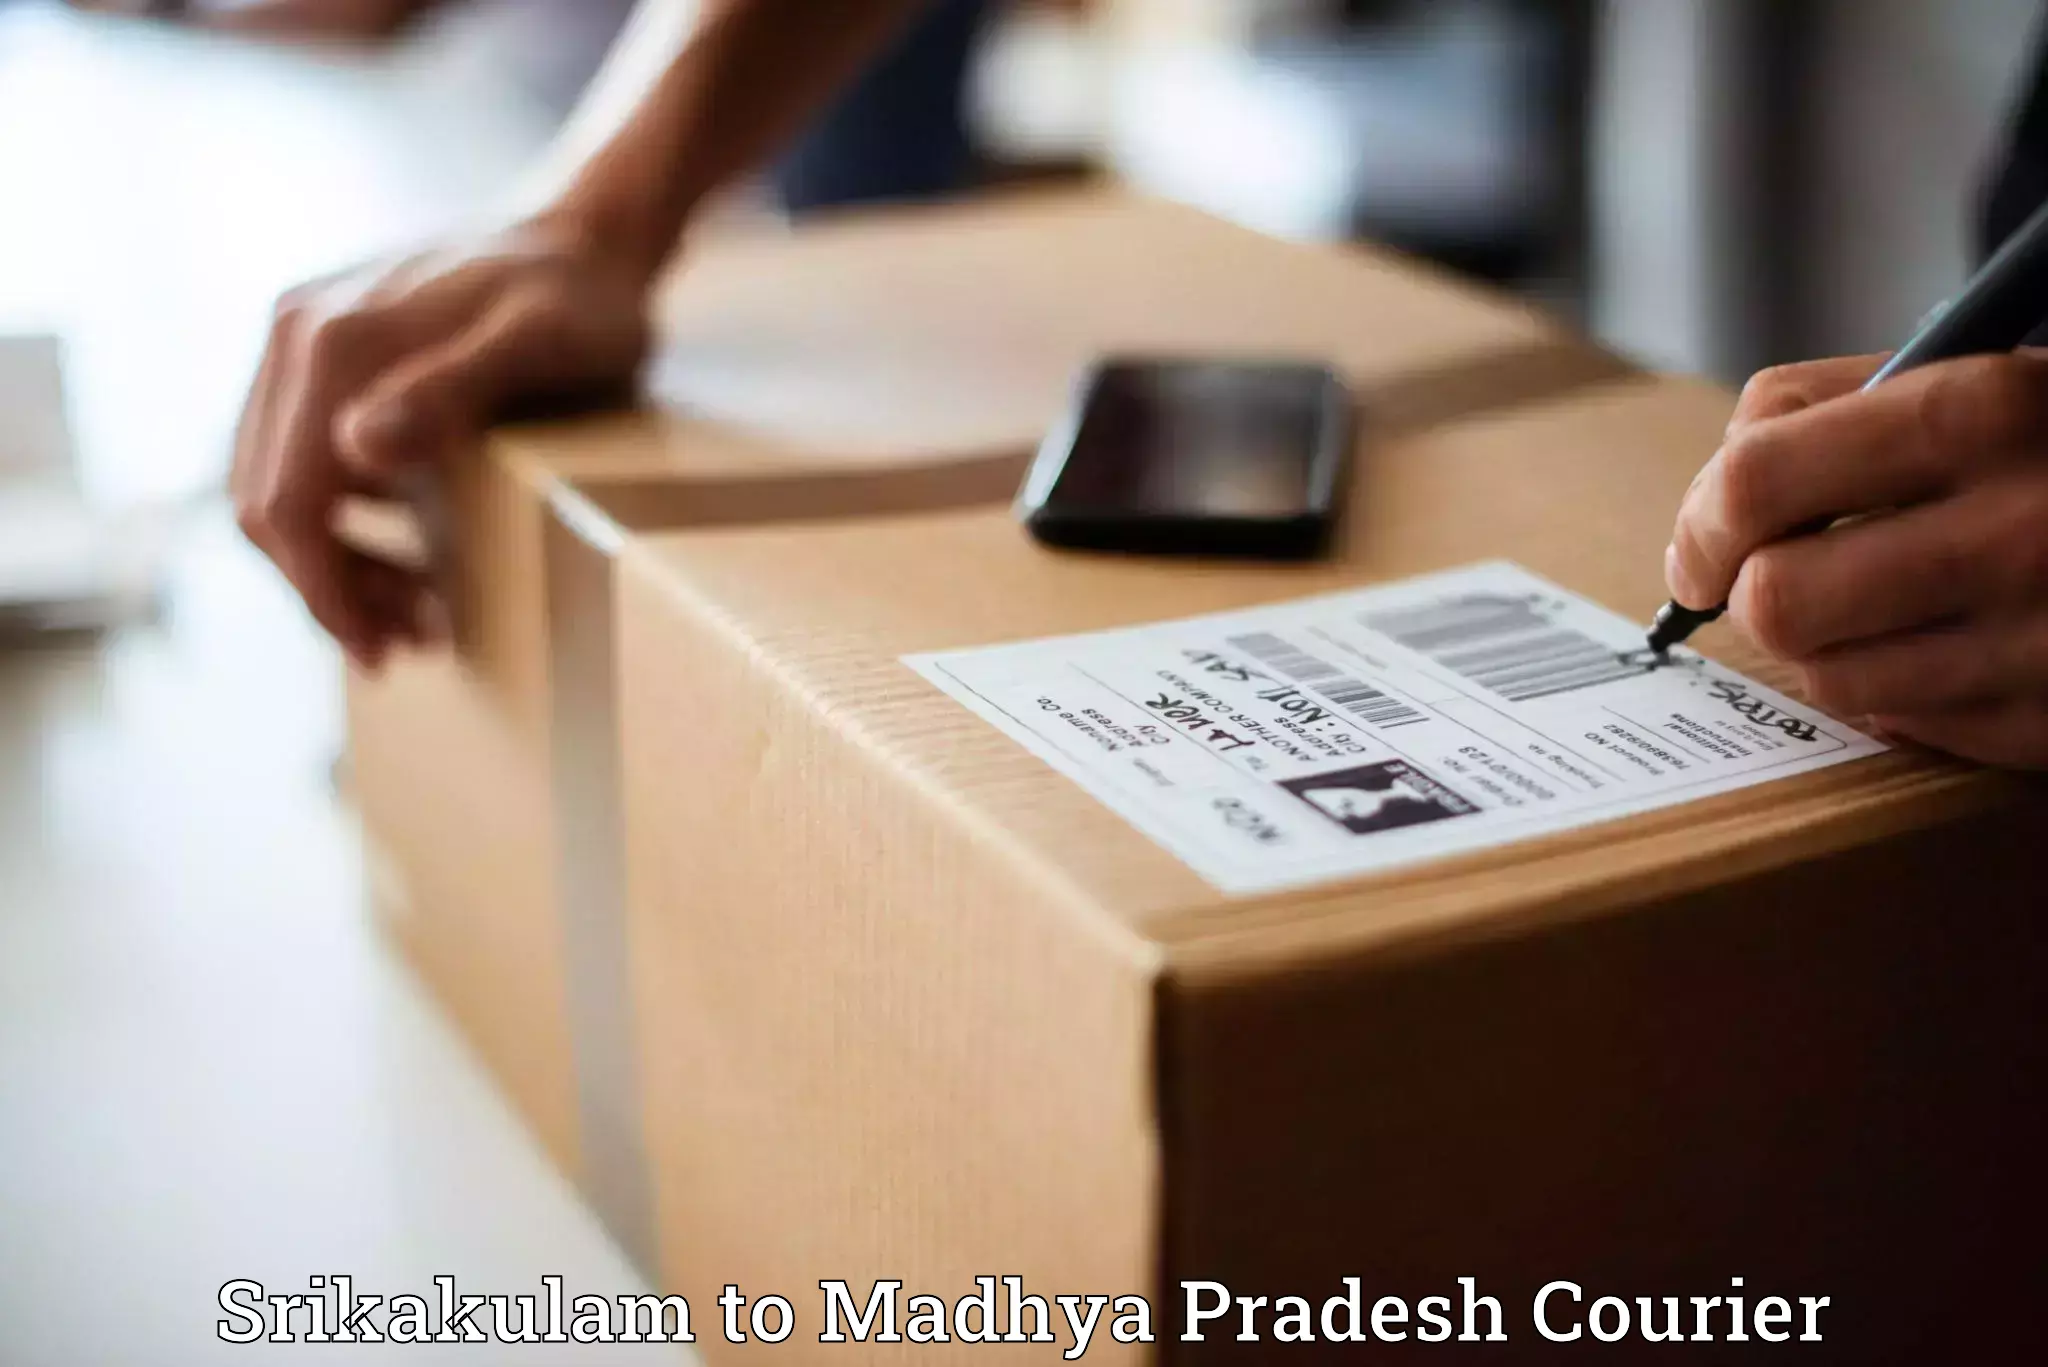 Fast shipping solutions Srikakulam to BHEL Bhopal